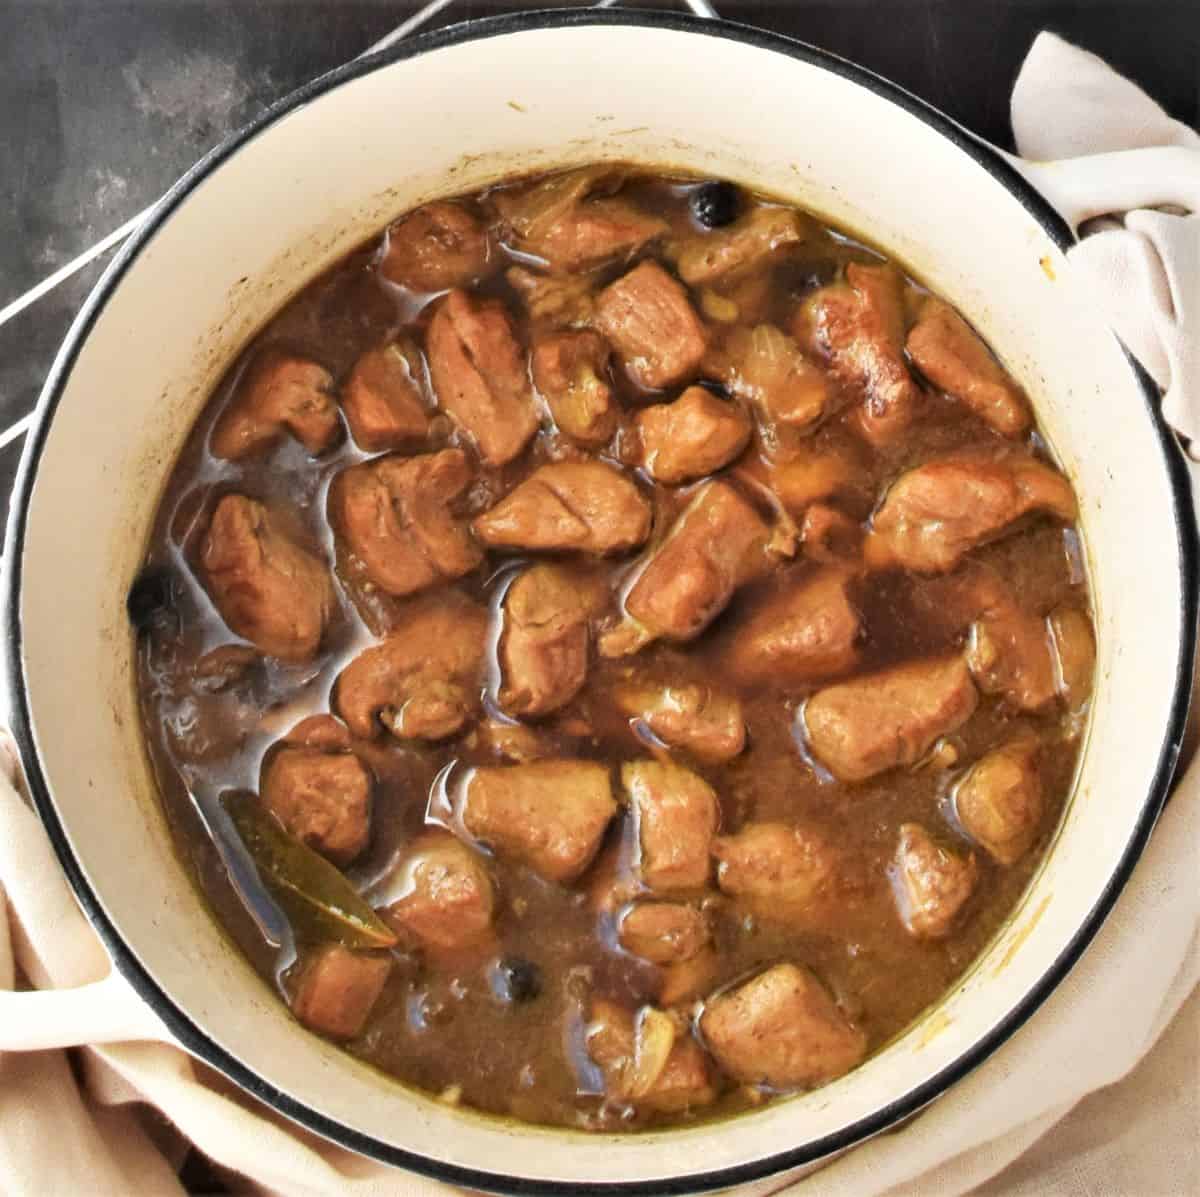 Polish pork stew in large white pot.